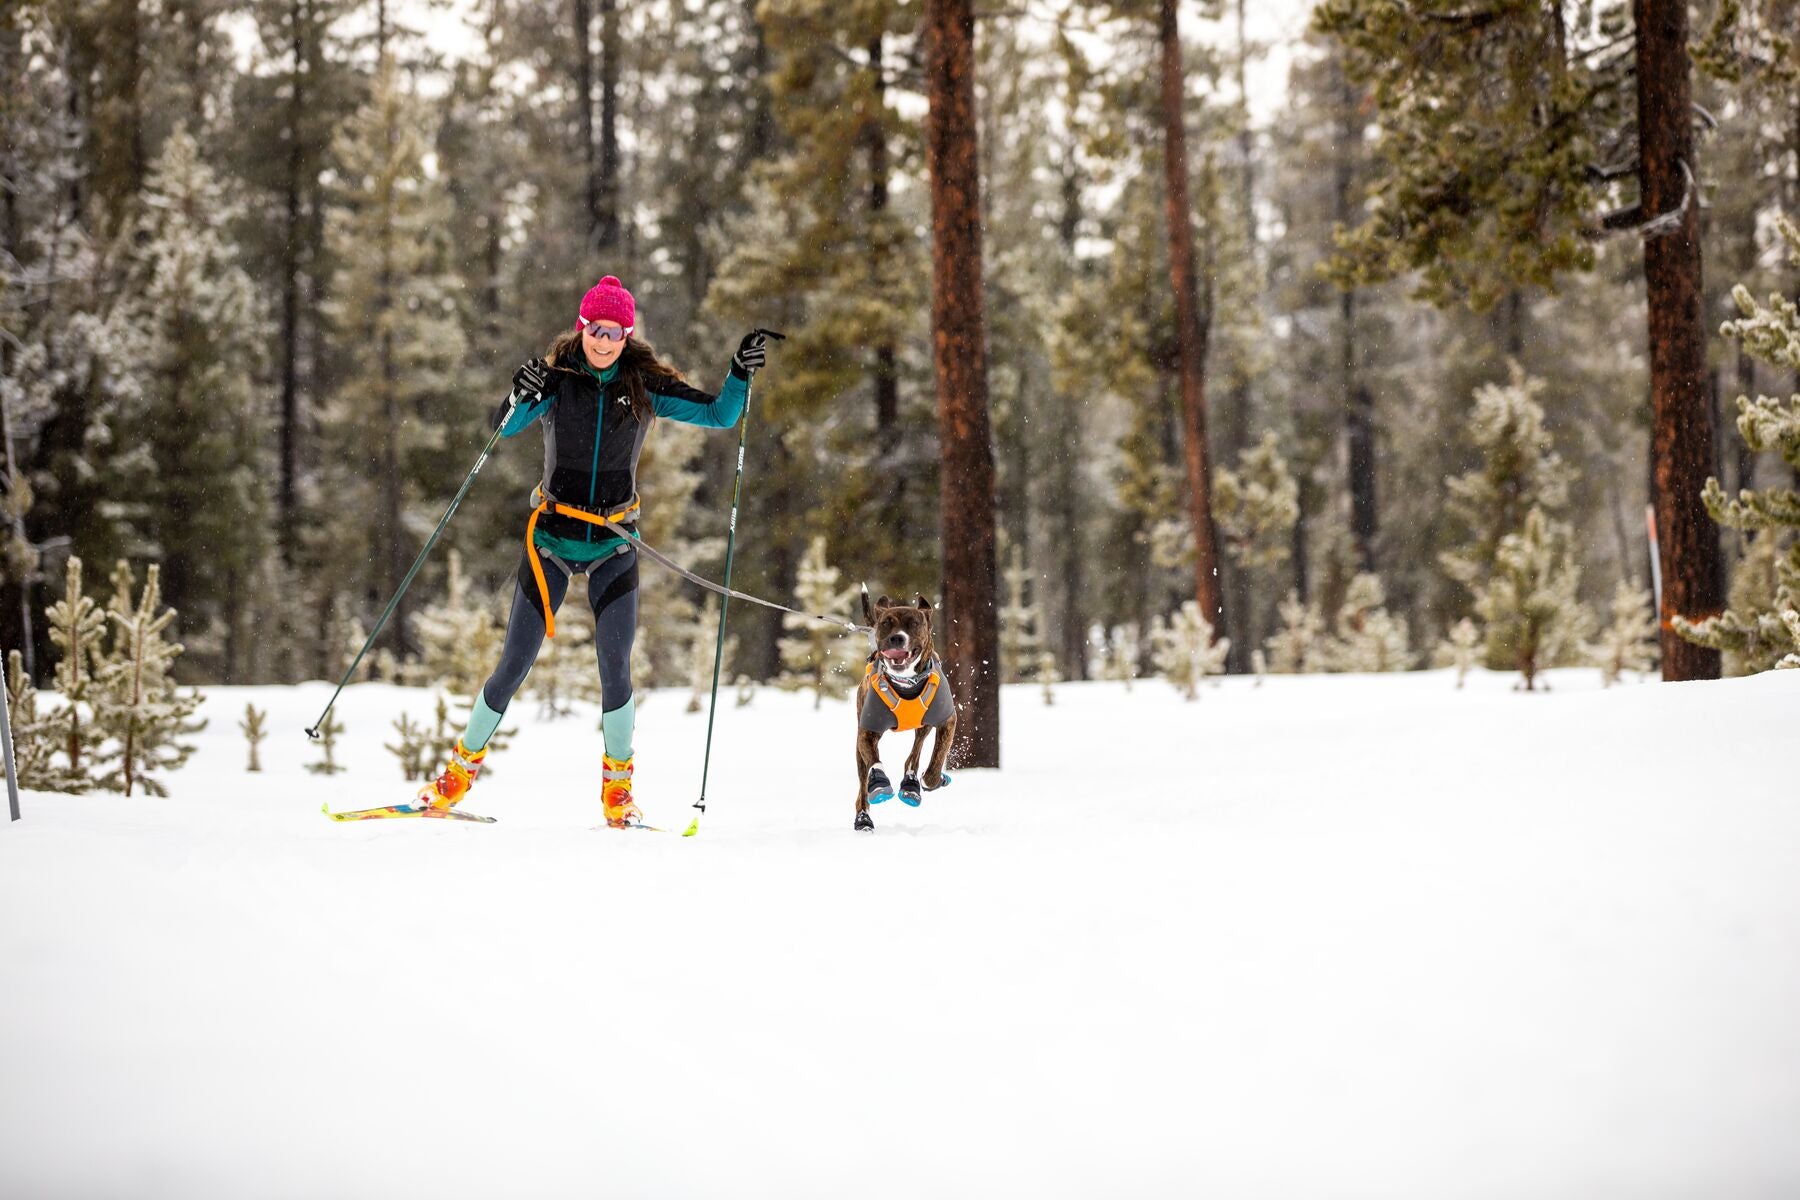 Kelly goes skijoring with dog Juniper using omnijore dog joring system.